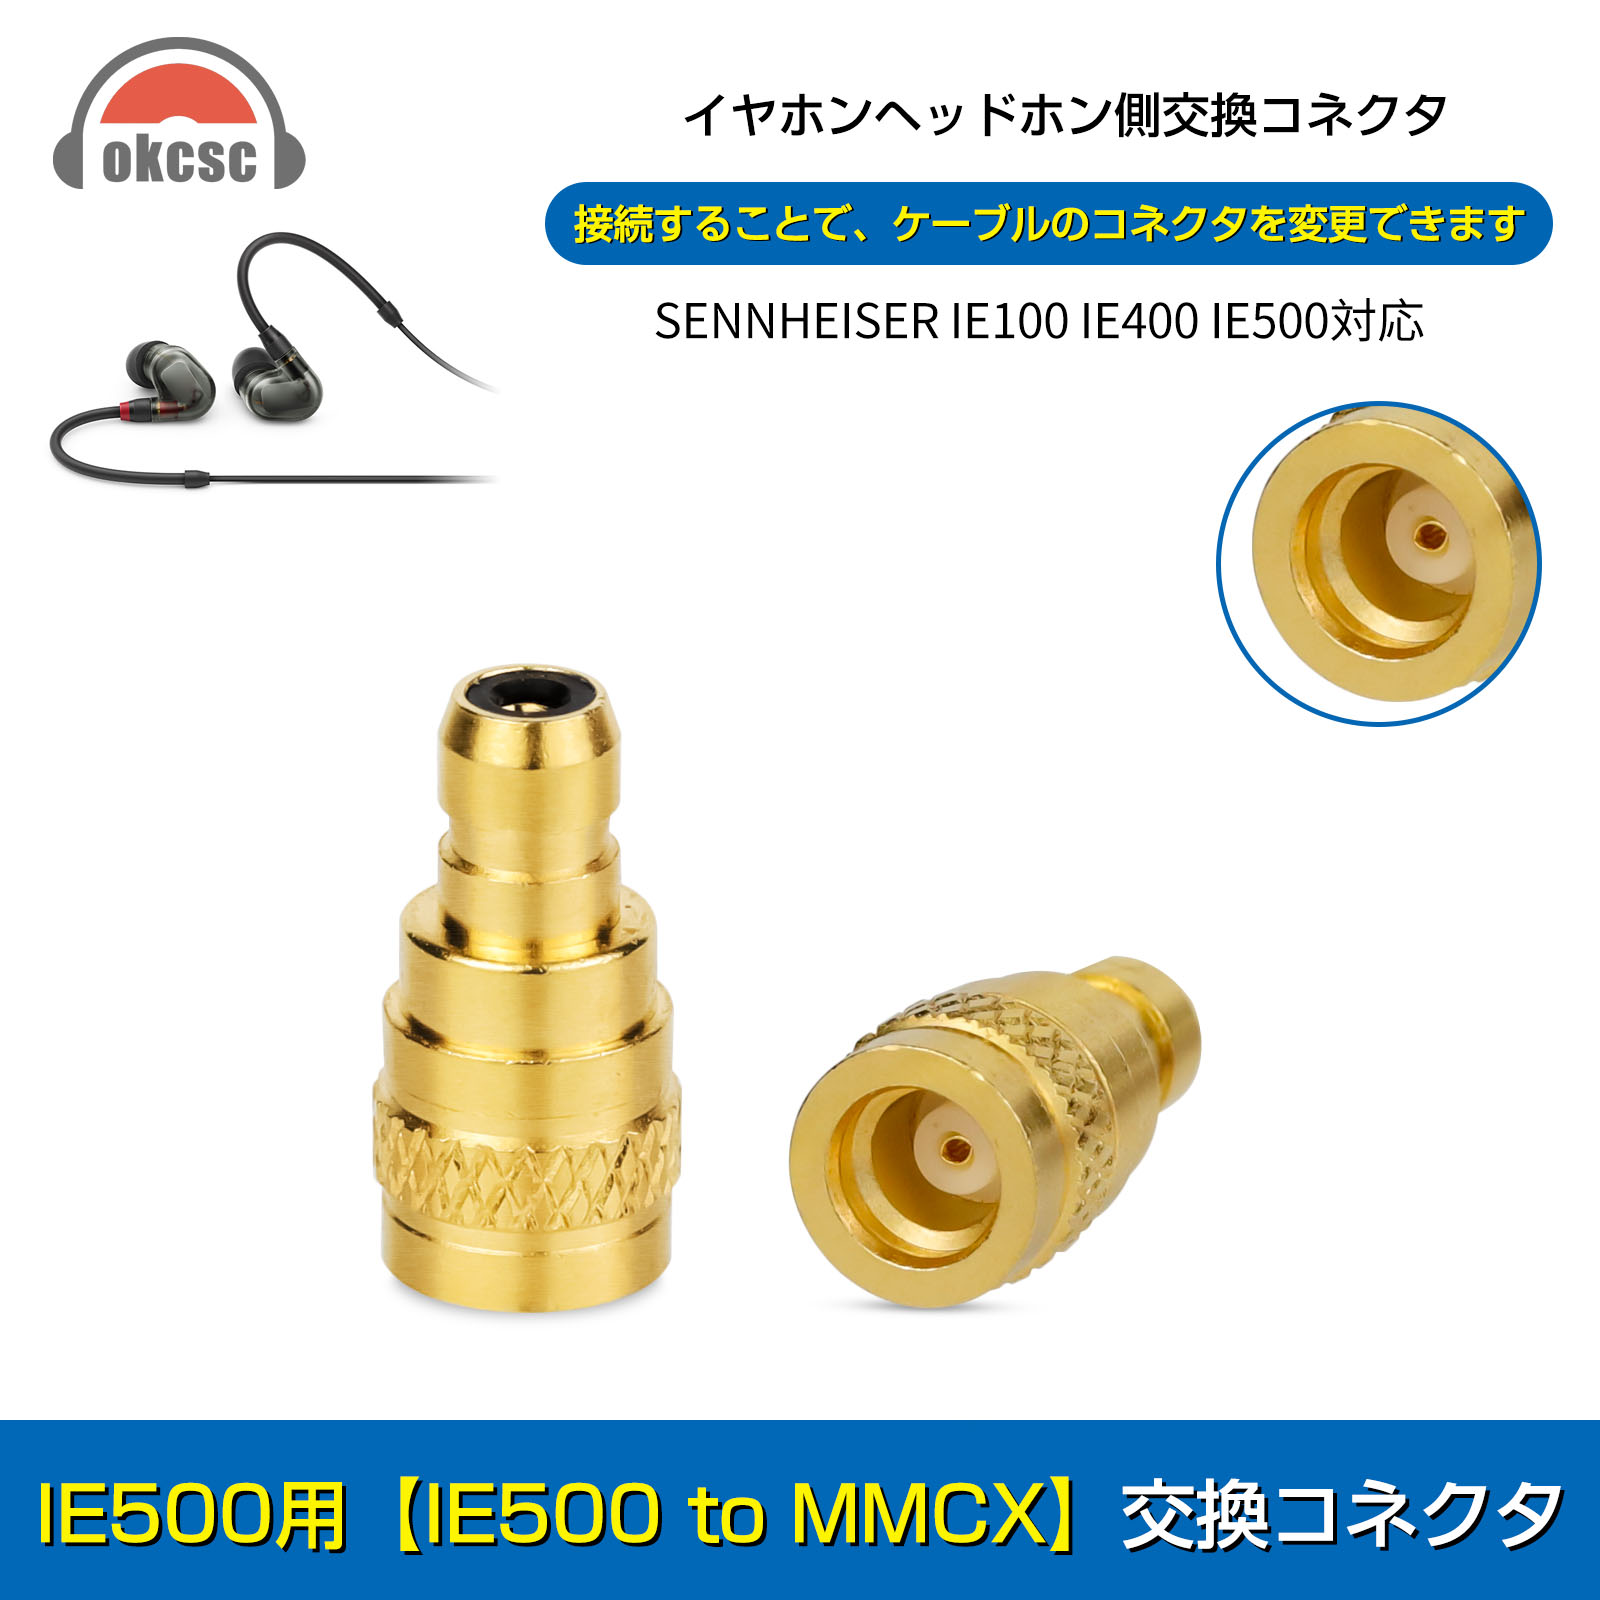 okcsc MMCX (リケーブル側) to IE400 / IE500/EAR-L(イヤホン側) アダプター コネクター スライダー 金メッキプラグ 統合成形技術 音質劣化なし簡潔 精緻 線材テスト作業用 ミニタイプ